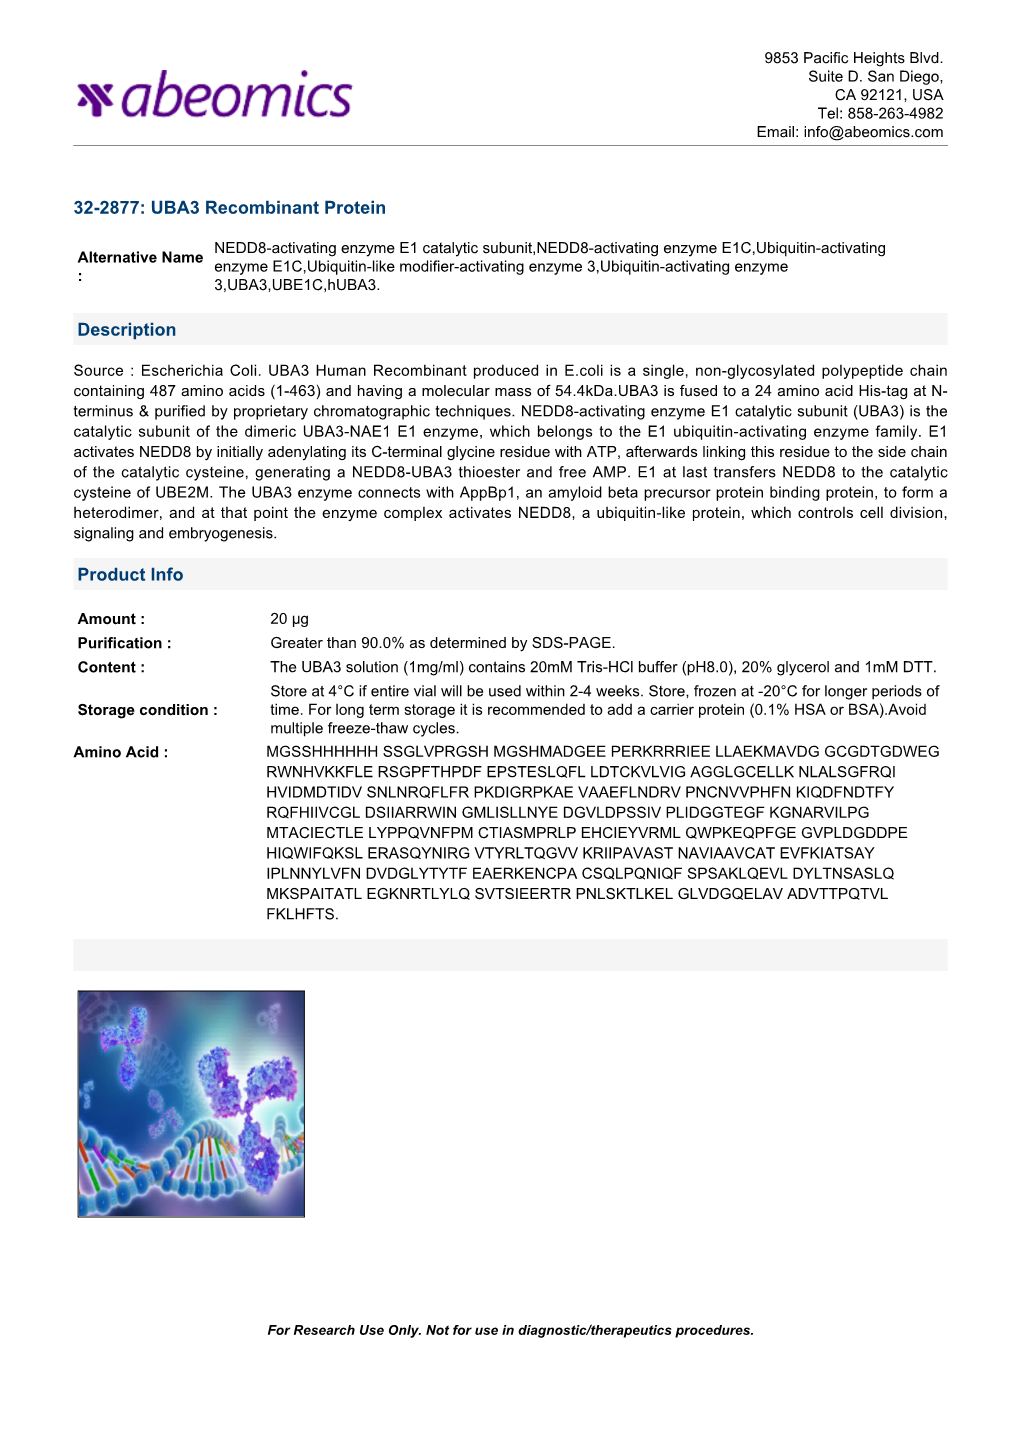 32-2877: UBA3 Recombinant Protein Description